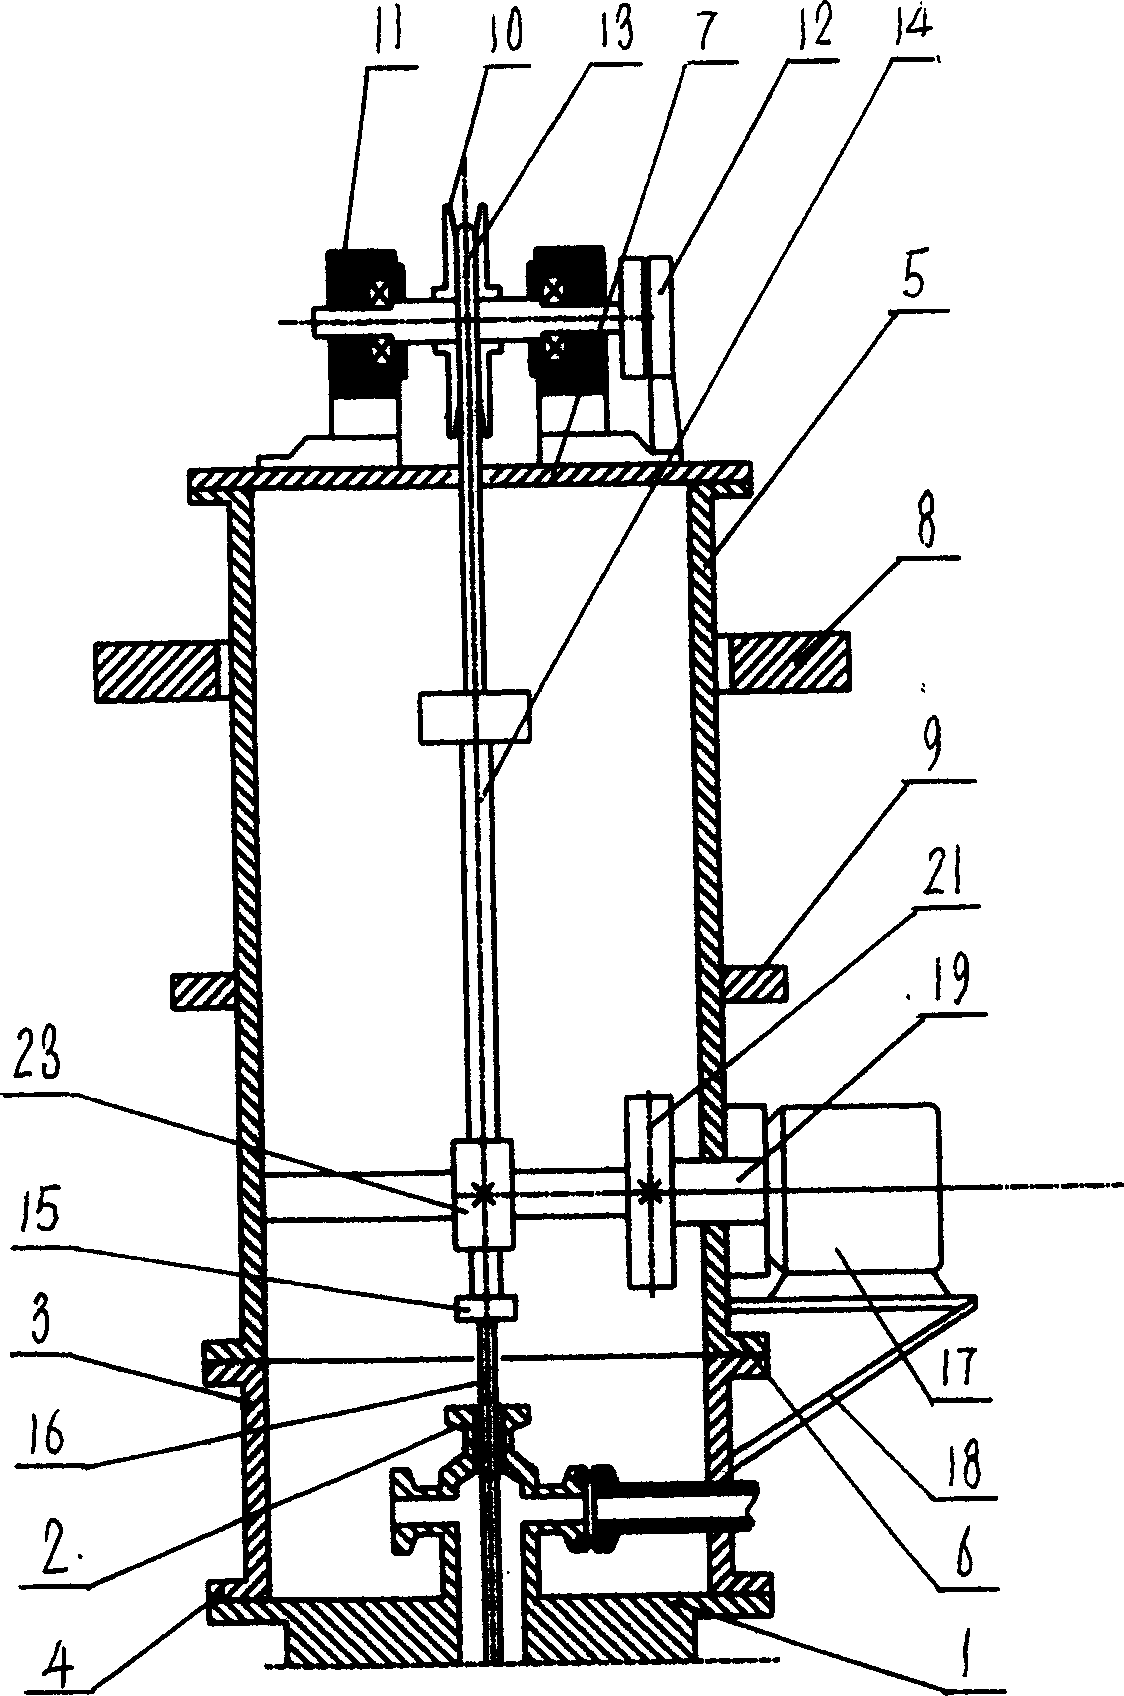 Vertical tube-gear rack type pumping unit